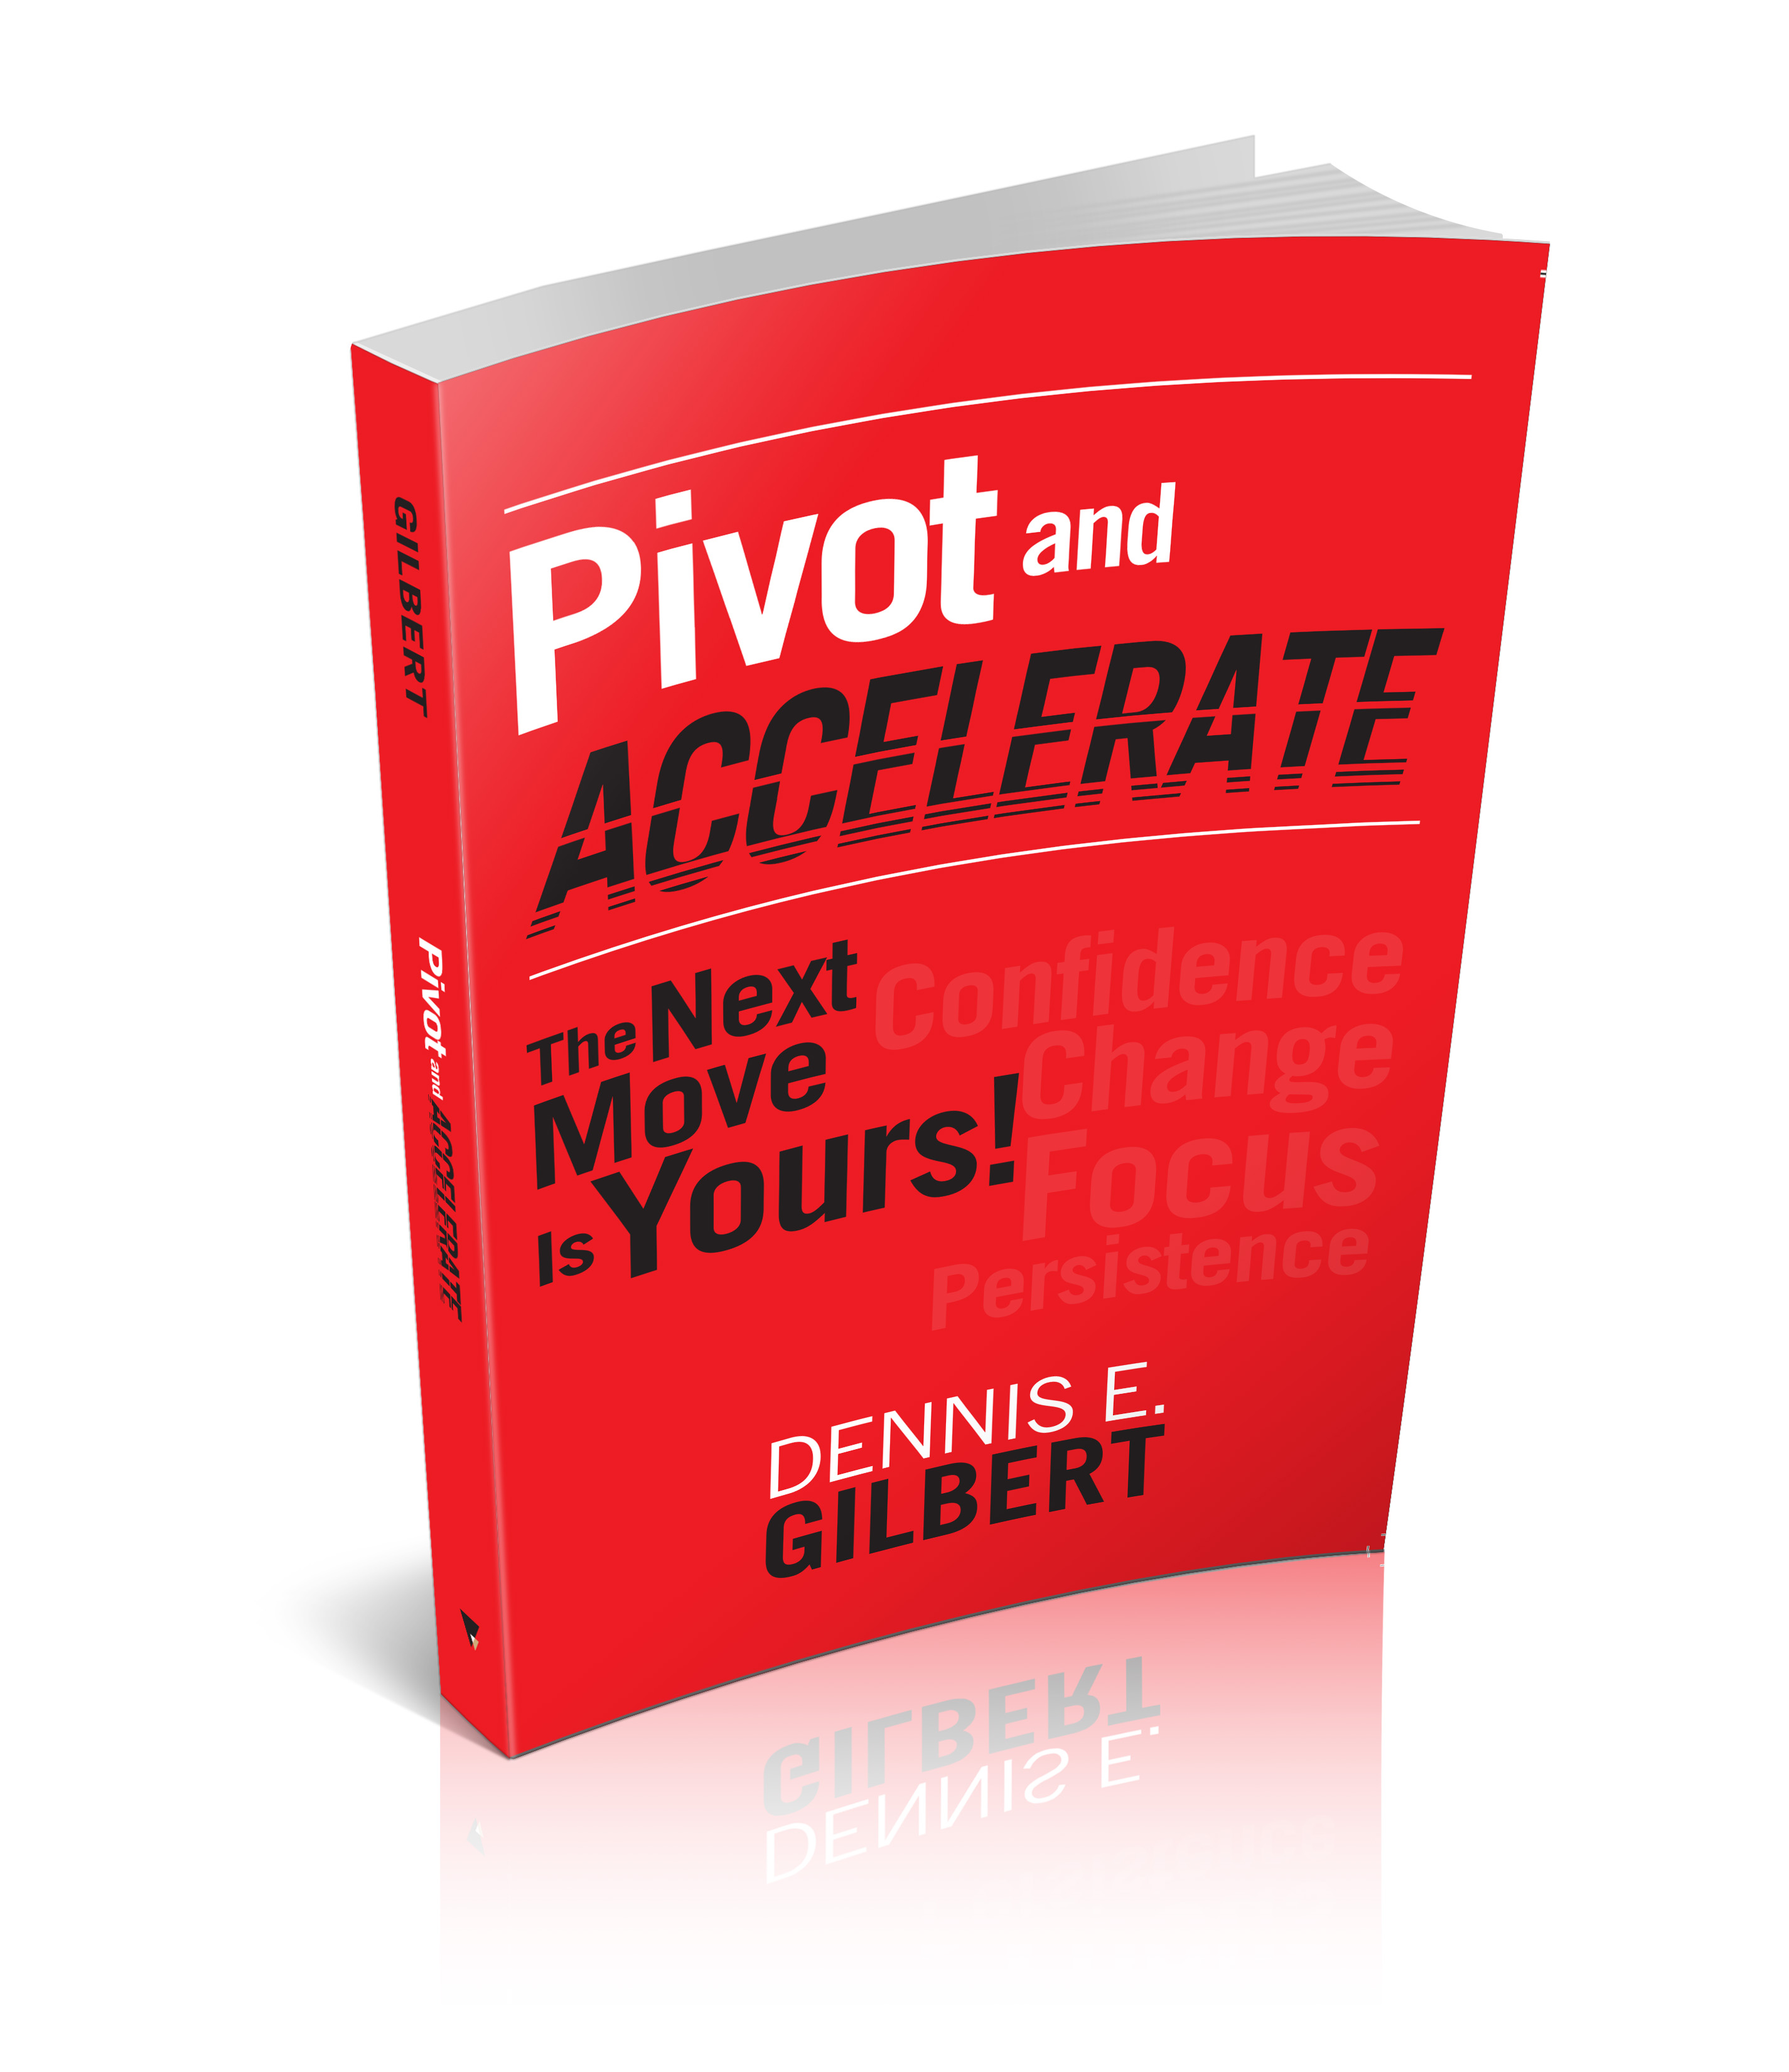 Pivot and Accelerate Dennis Gilbert